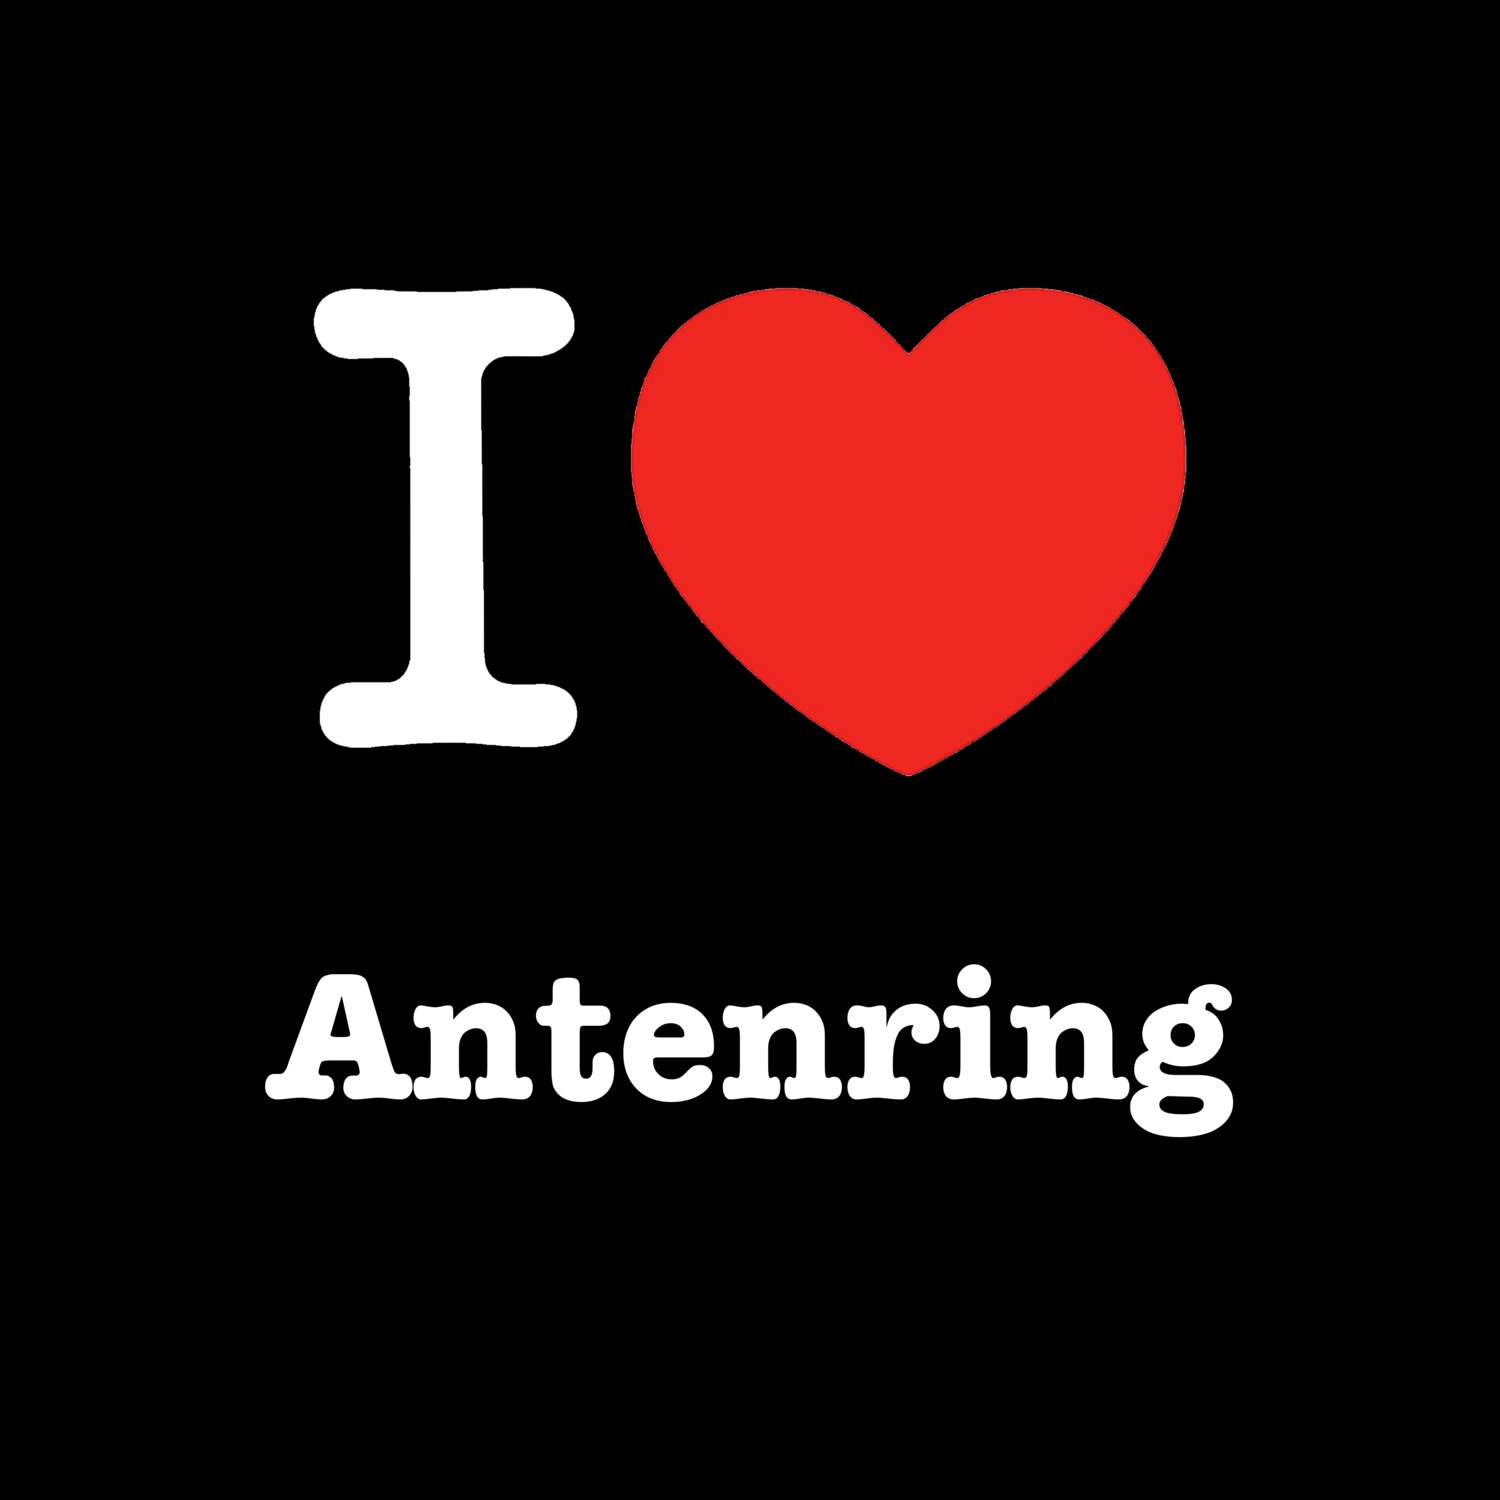 Antenring T-Shirt »I love«